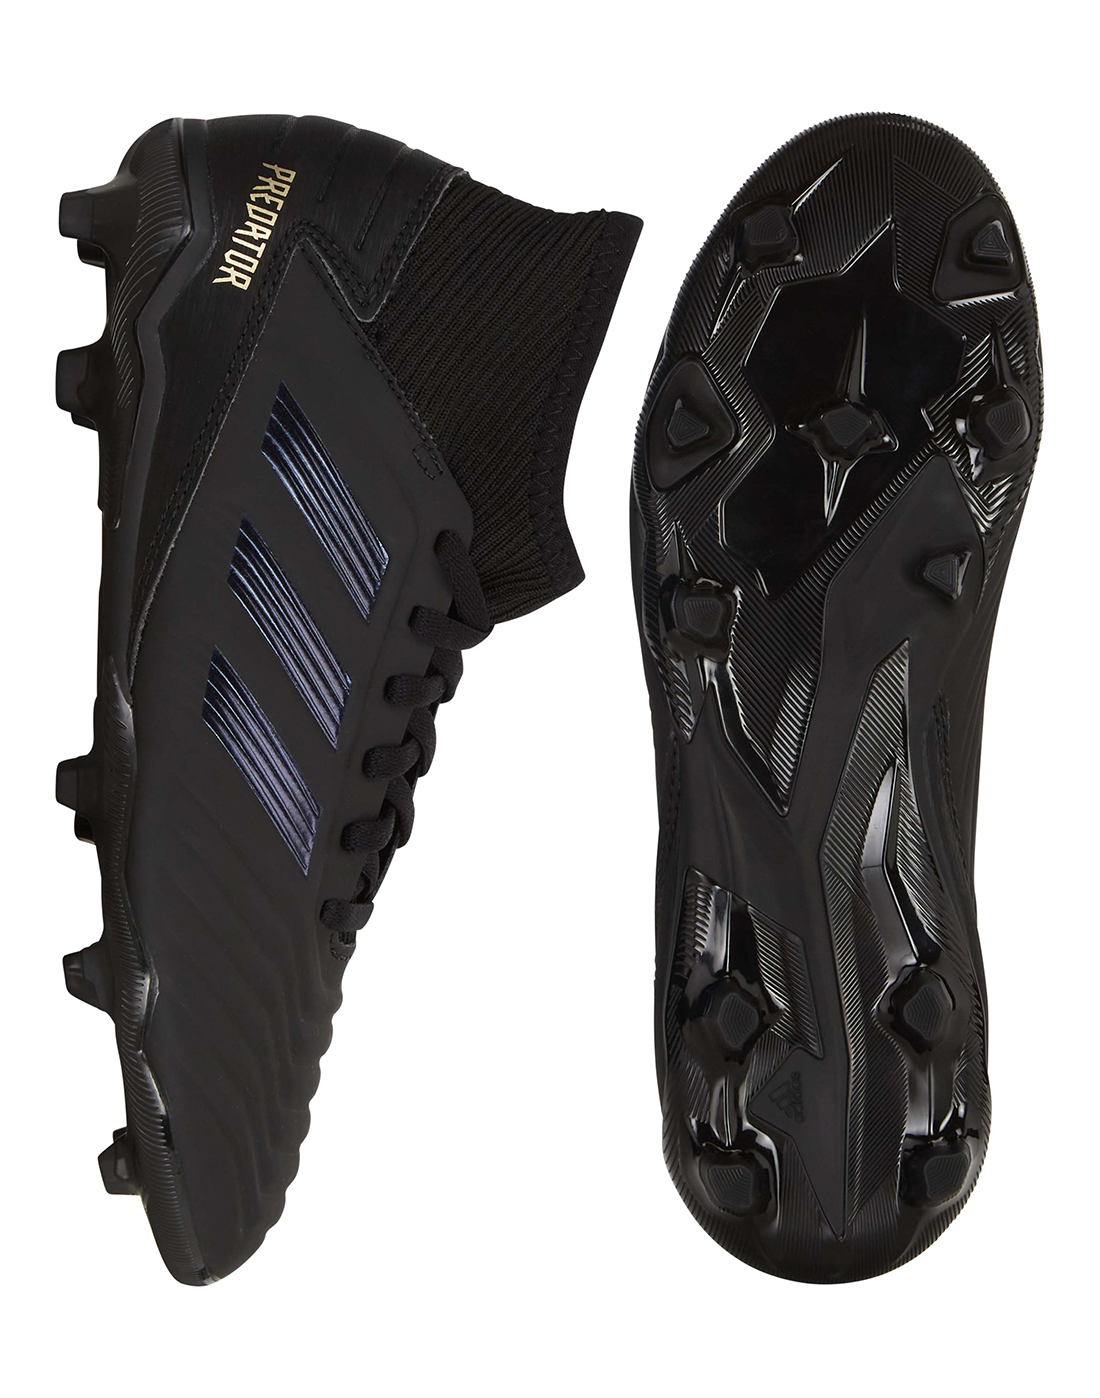 adidas predator 19.3 childrens fg football boots